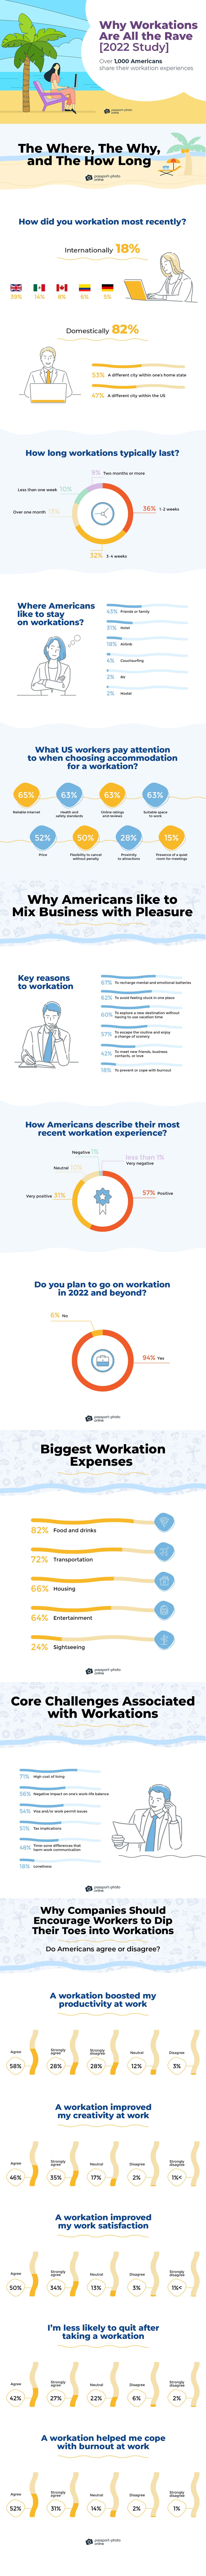 Passport Photo Online infographic on statistics around employees taking 'workations'